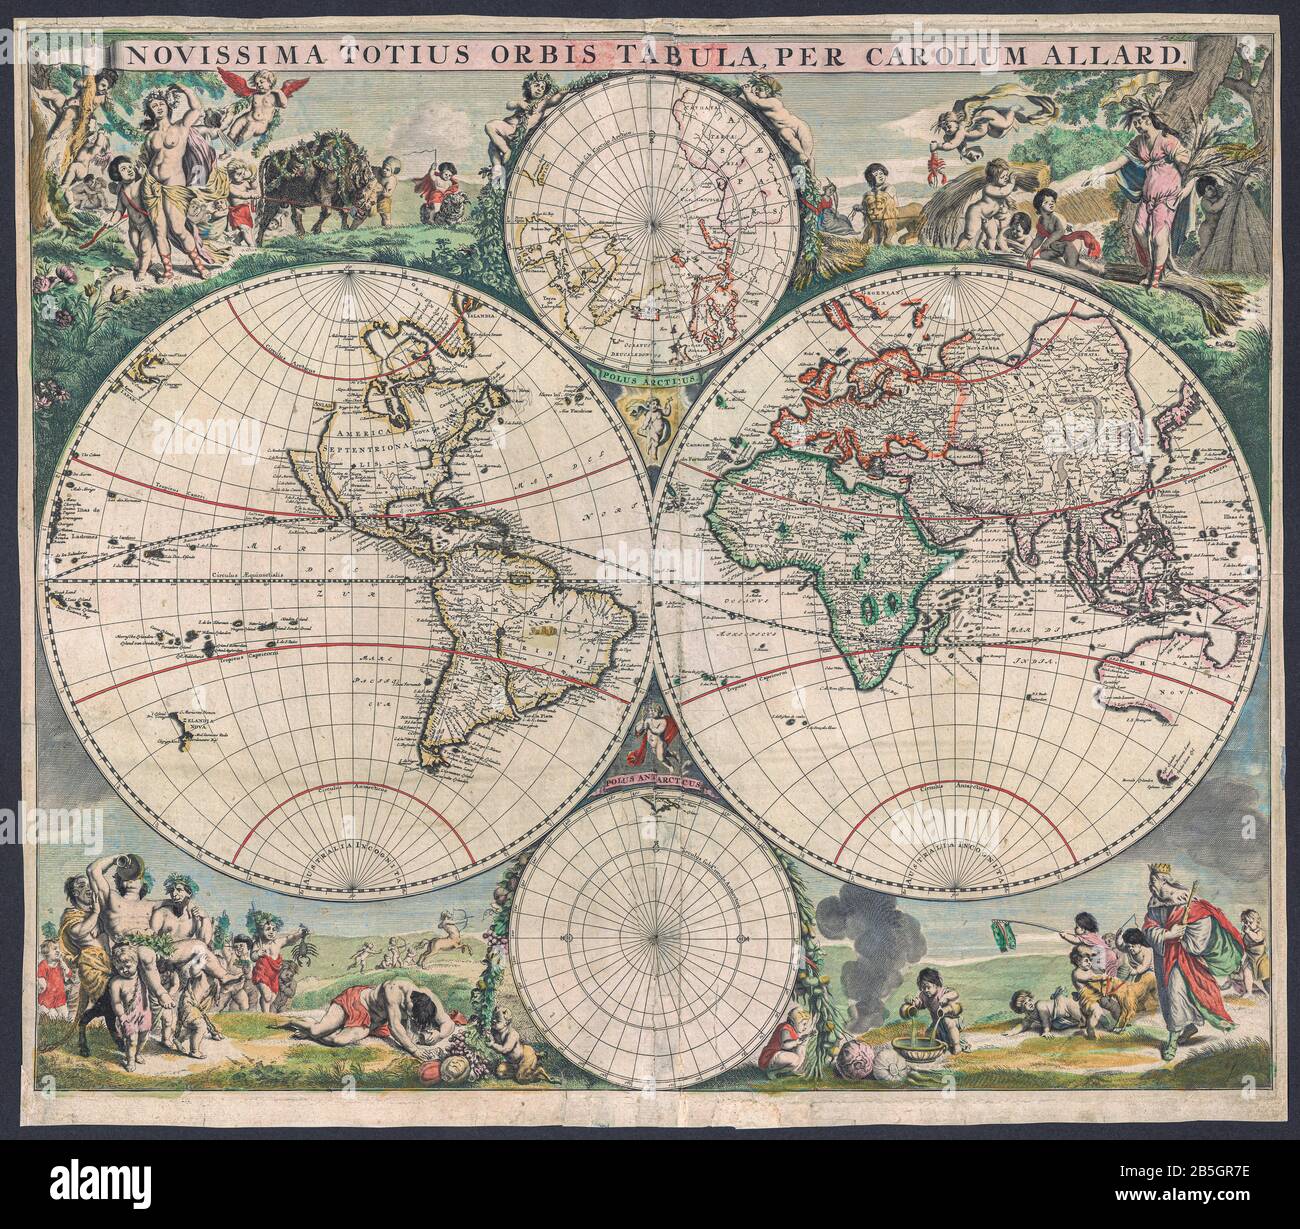 Carel Allard, (1648-approximately 1709). Novissima totius Orbis tabula  “New map of the whole world”. Amsterdam 1683. Stock Photo